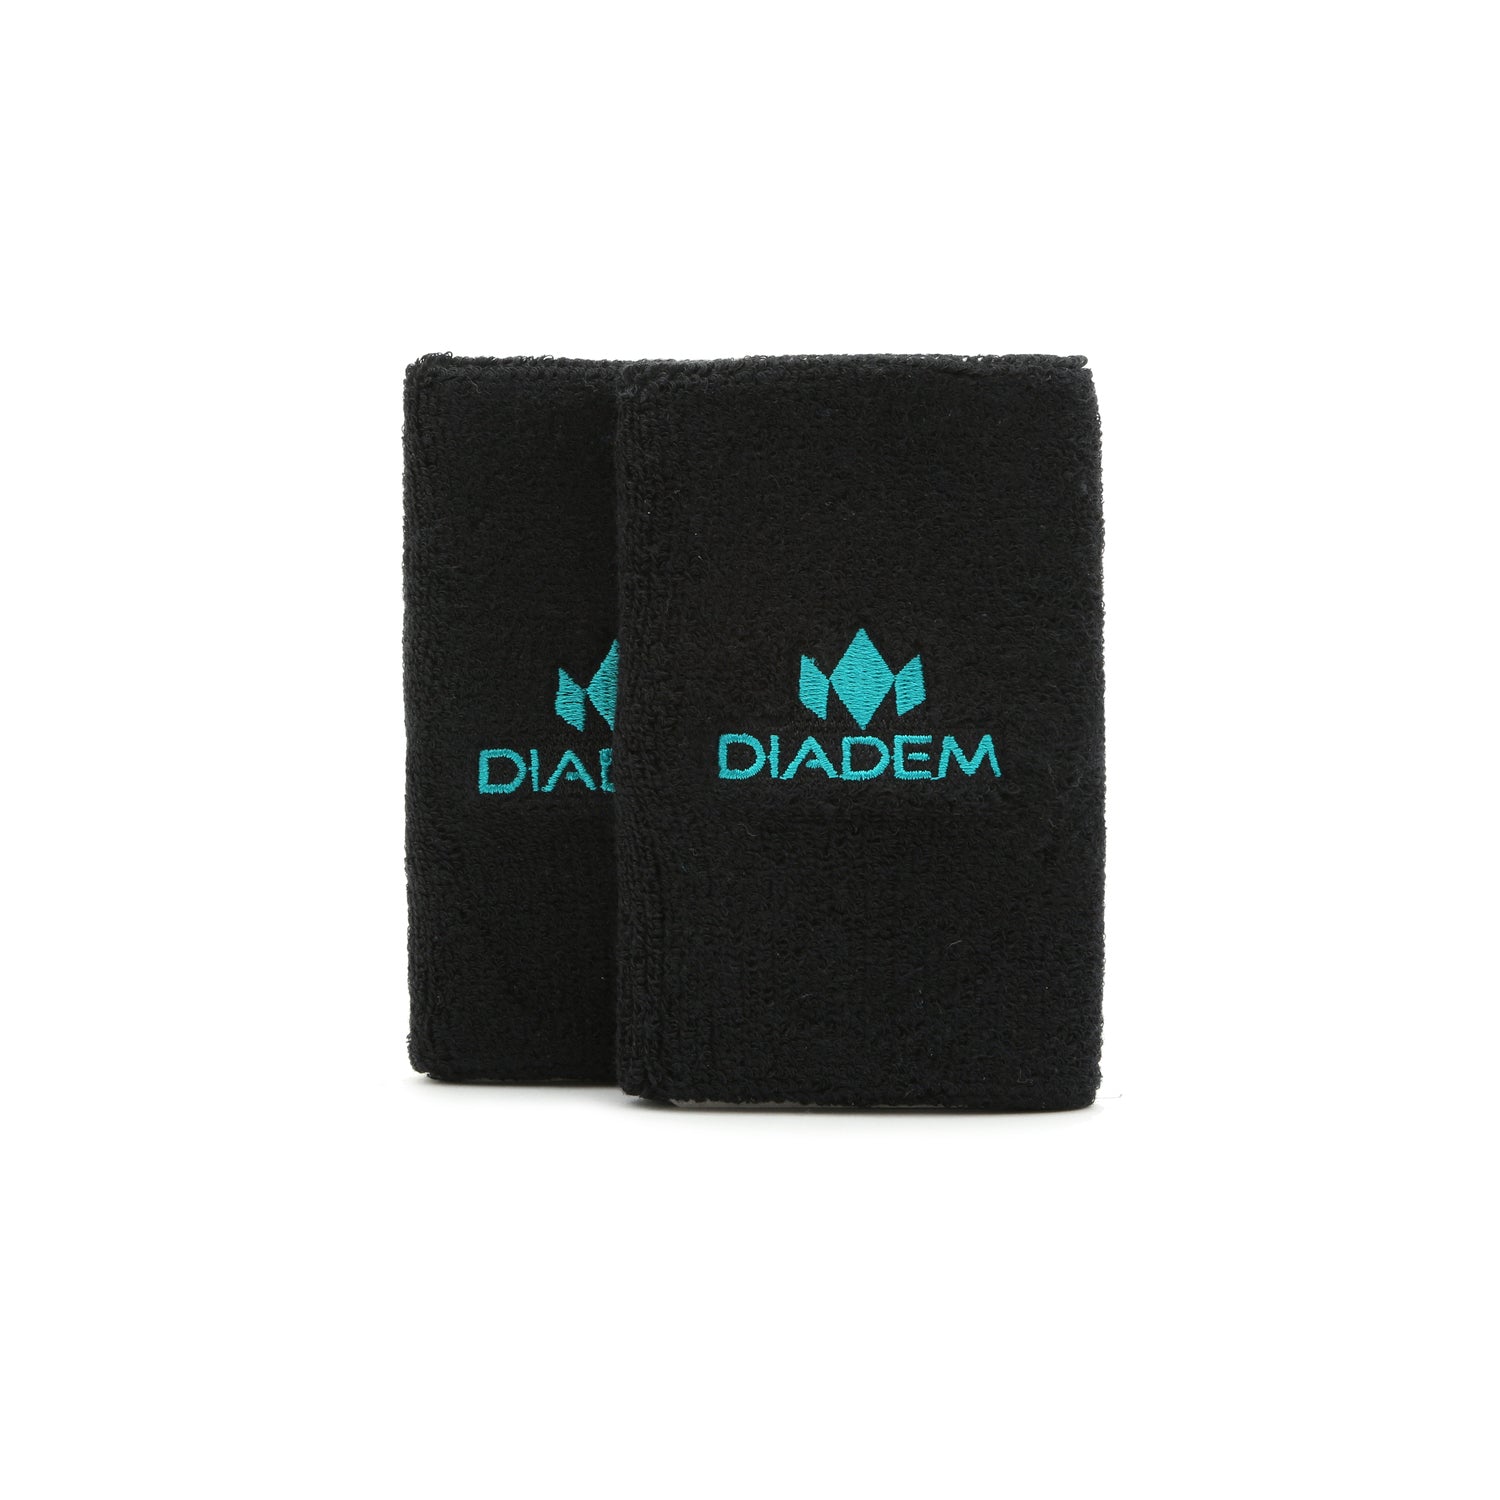 Wristbands with Diadem Logo